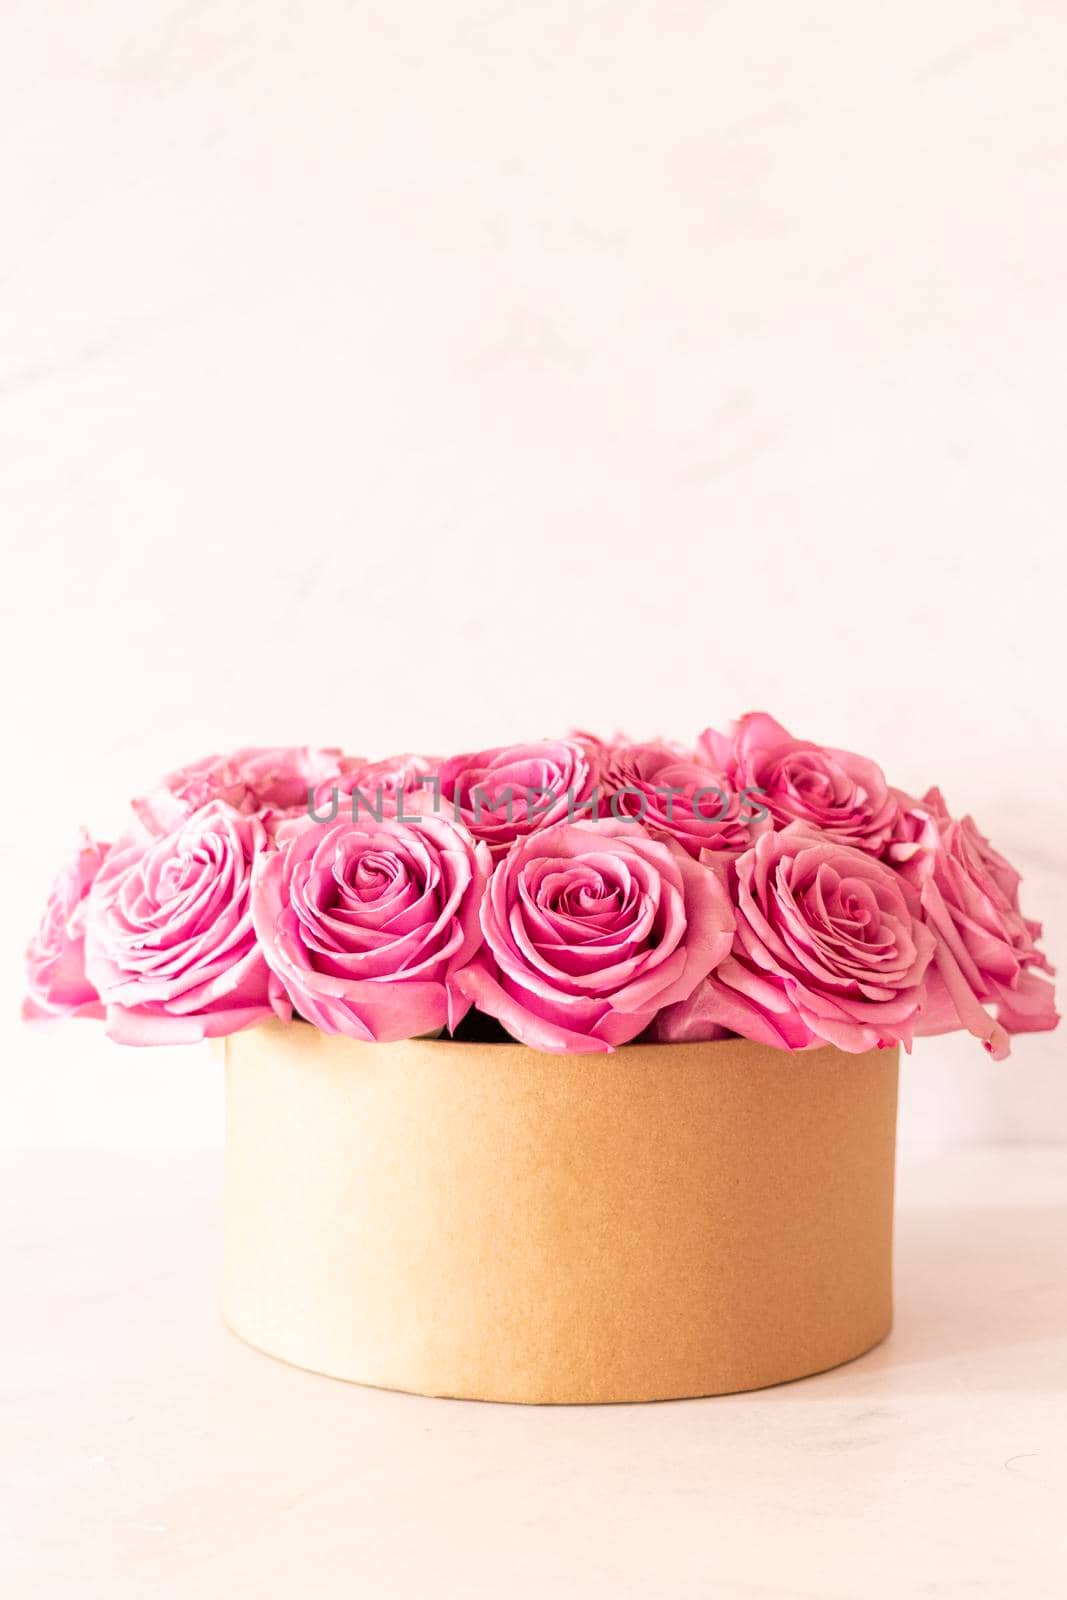 Floral arrangement composed of pink roses for spring